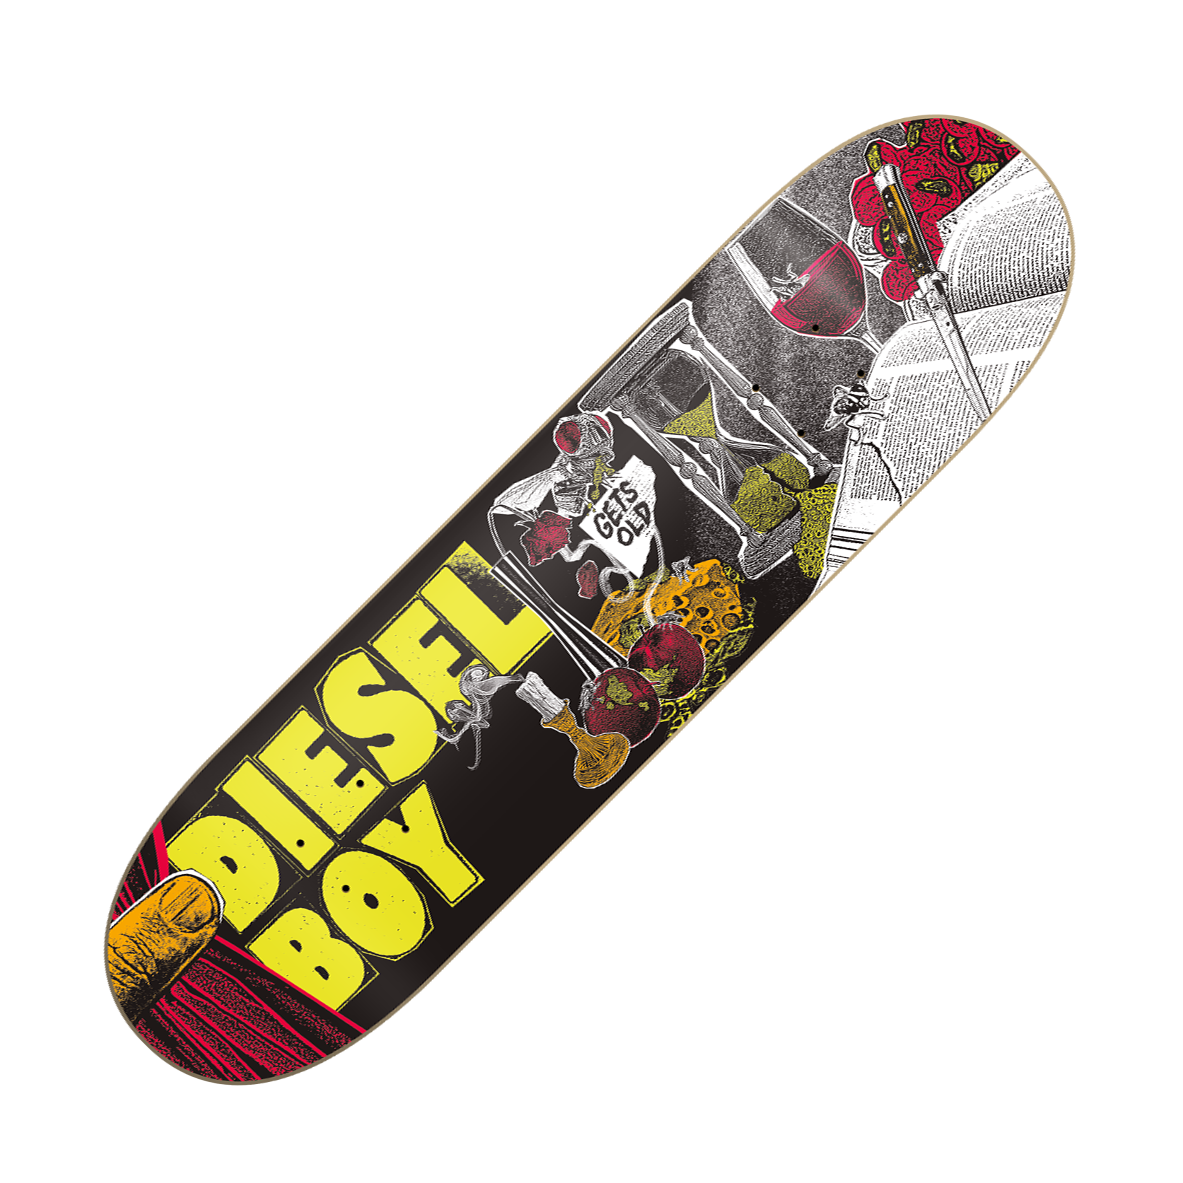 DIESEL BOY - "Gets Old" (Skateboard Deck)